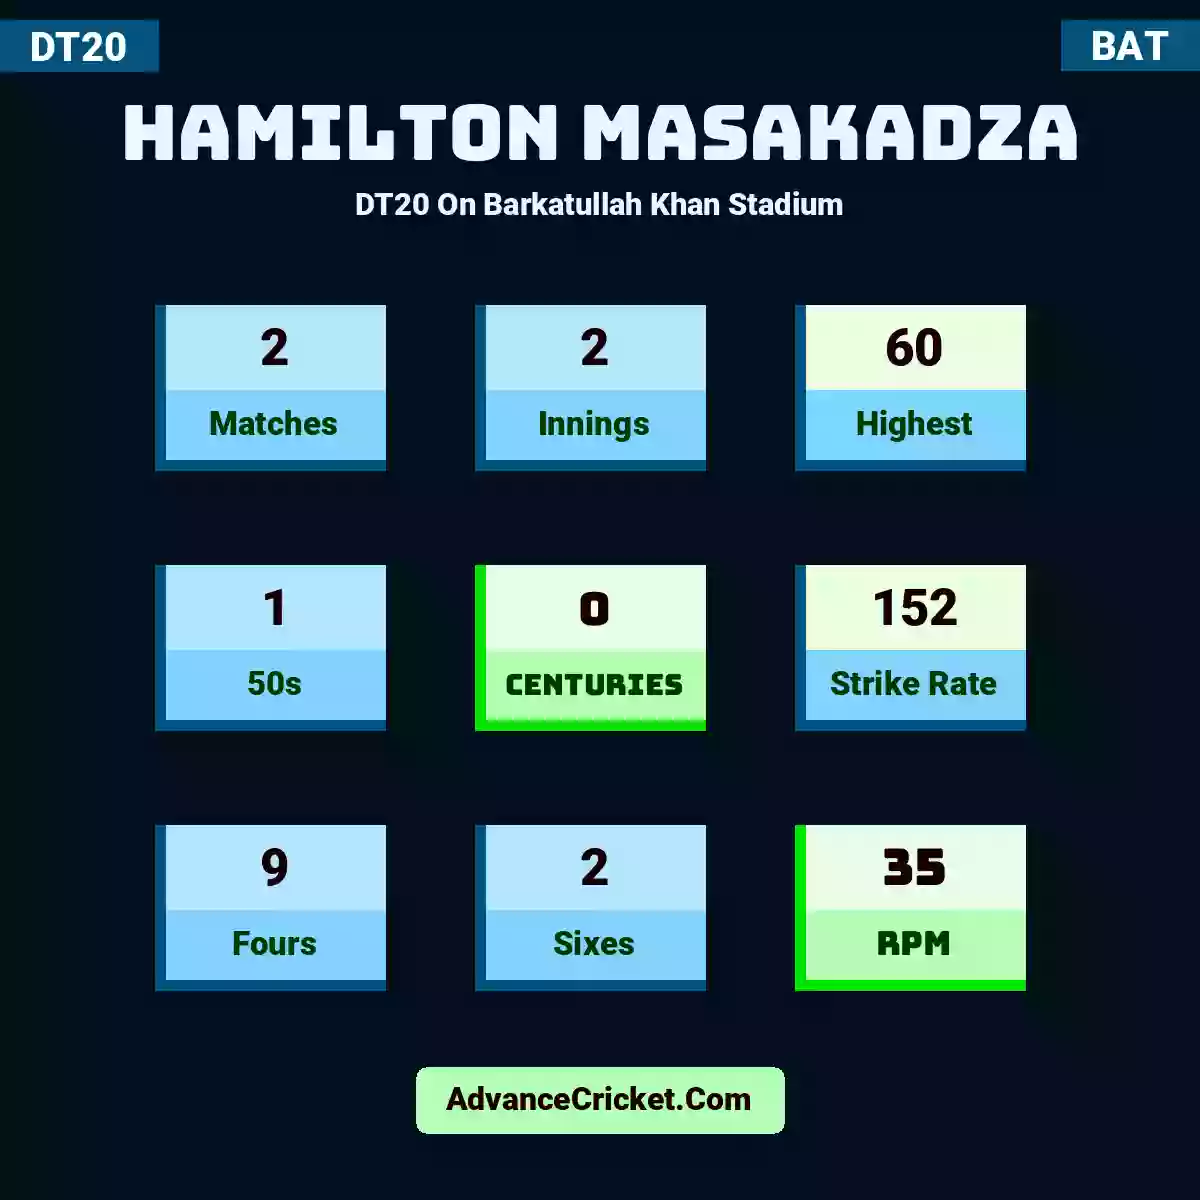 Hamilton Masakadza DT20  On Barkatullah Khan Stadium, Hamilton Masakadza played 2 matches, scored 60 runs as highest, 1 half-centuries, and 0 centuries, with a strike rate of 152. H.Masakadza hit 9 fours and 2 sixes, with an RPM of 35.